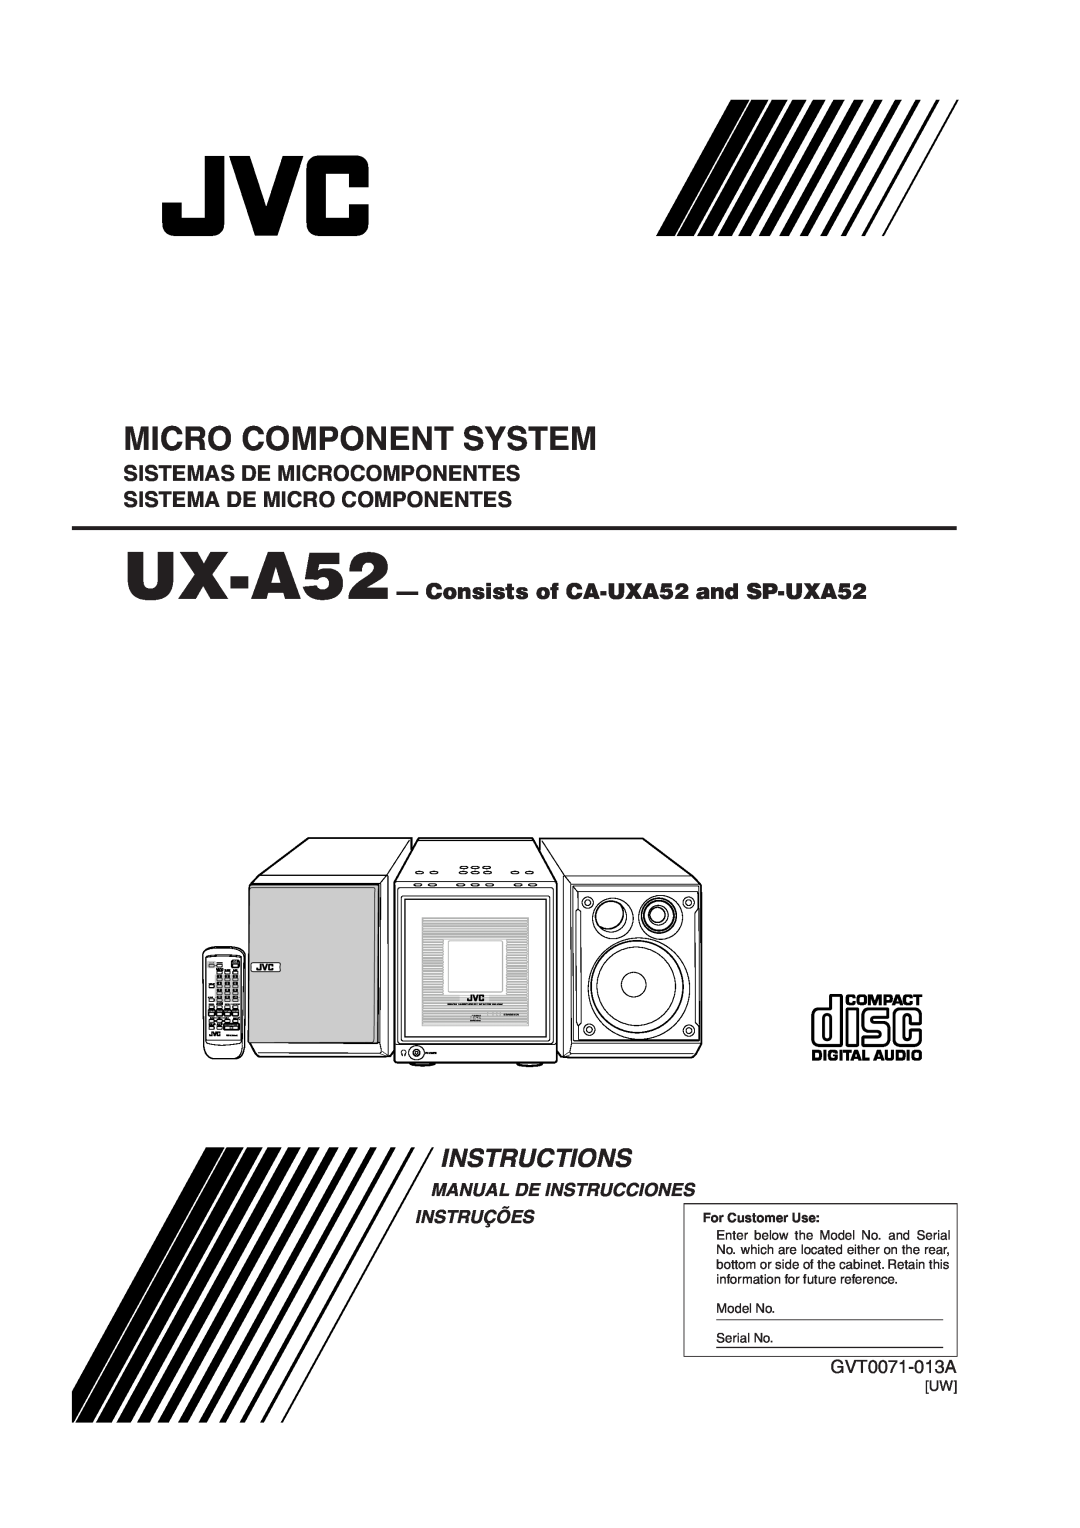 JVC UX-A52 Sistemas De Microcomponentes, Sistema De Micro Componentes, GVT0071-013A, Micro Component System, Instructions 